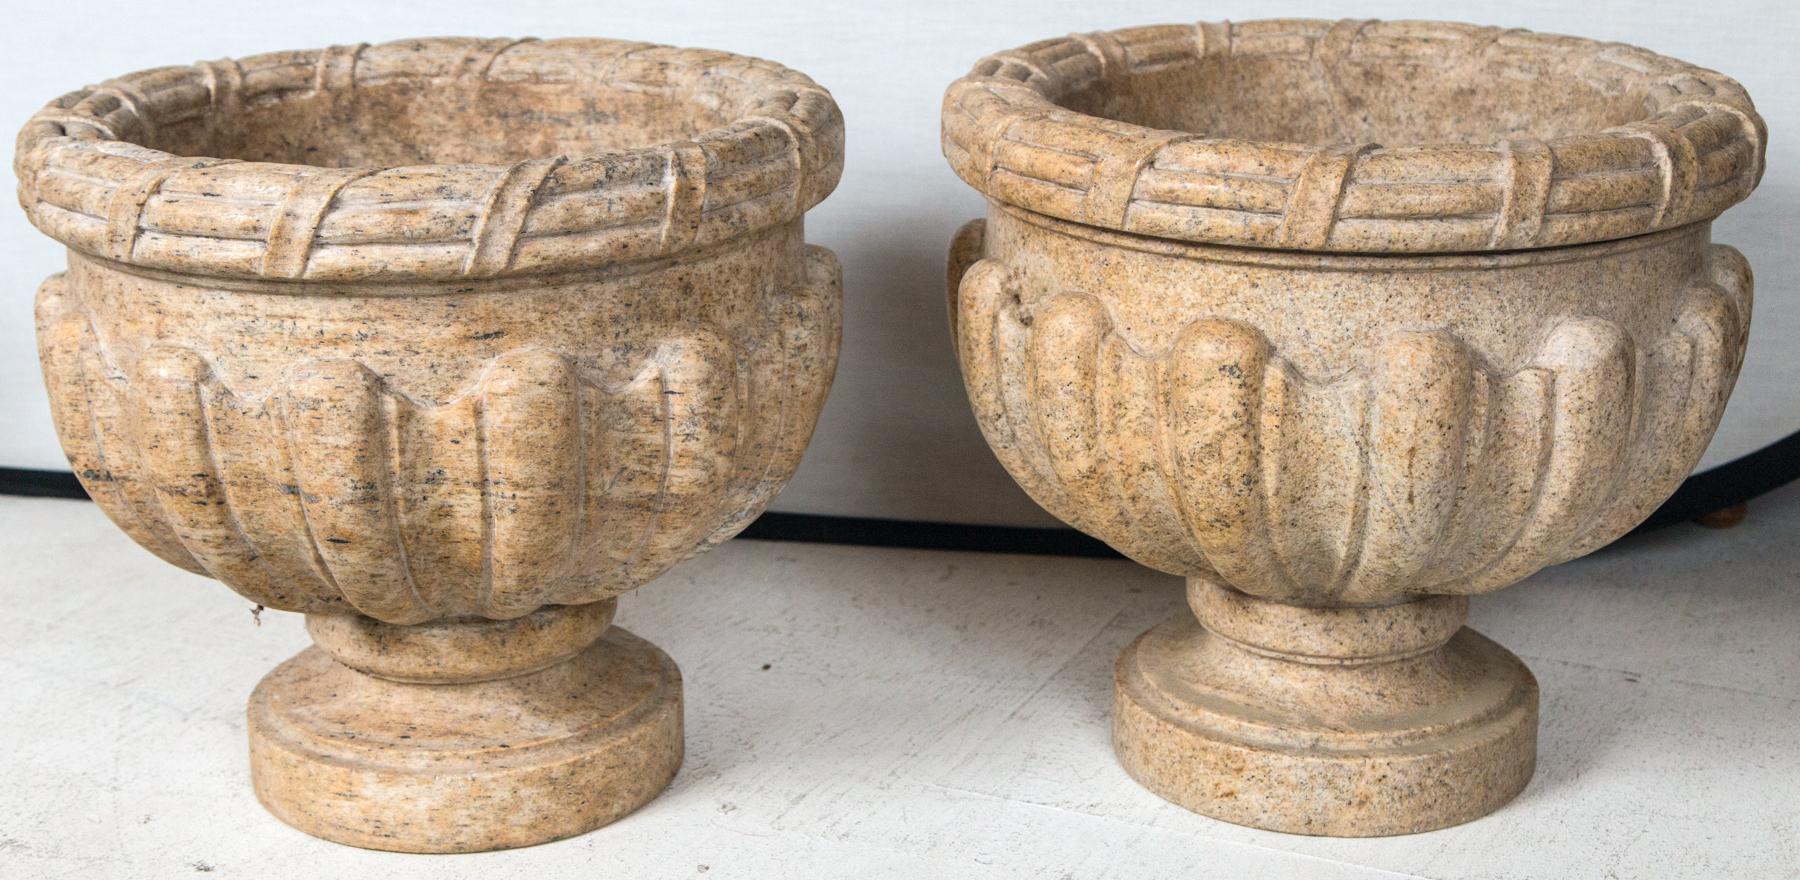 Pair of superb miPair of superb midcentury carved, polished granite urnes.d-century carved, polished granite urnes